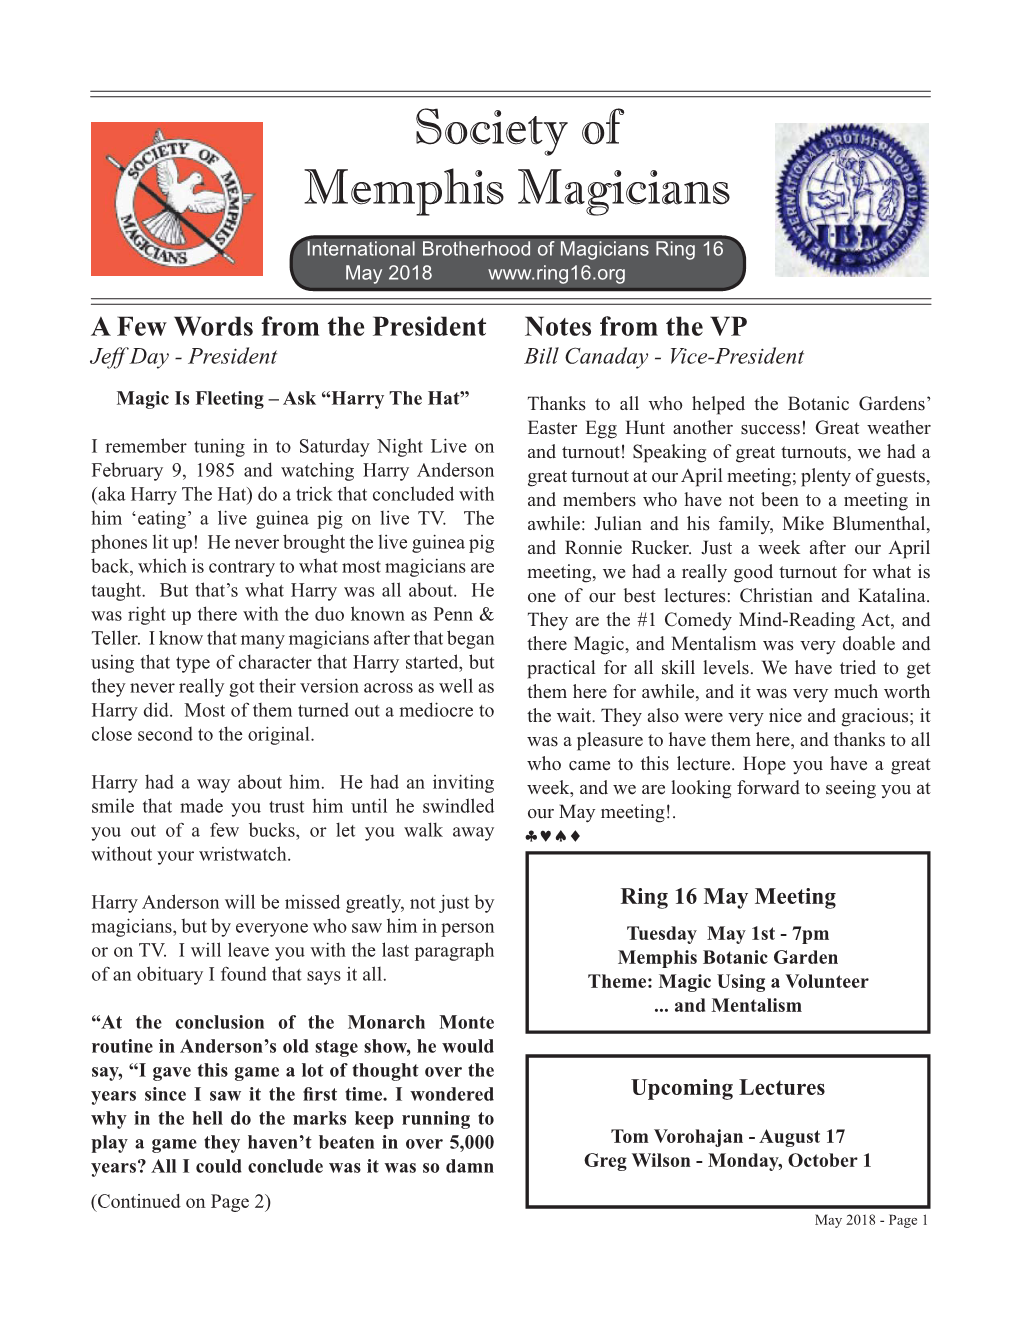 Society of Memphis Magicians